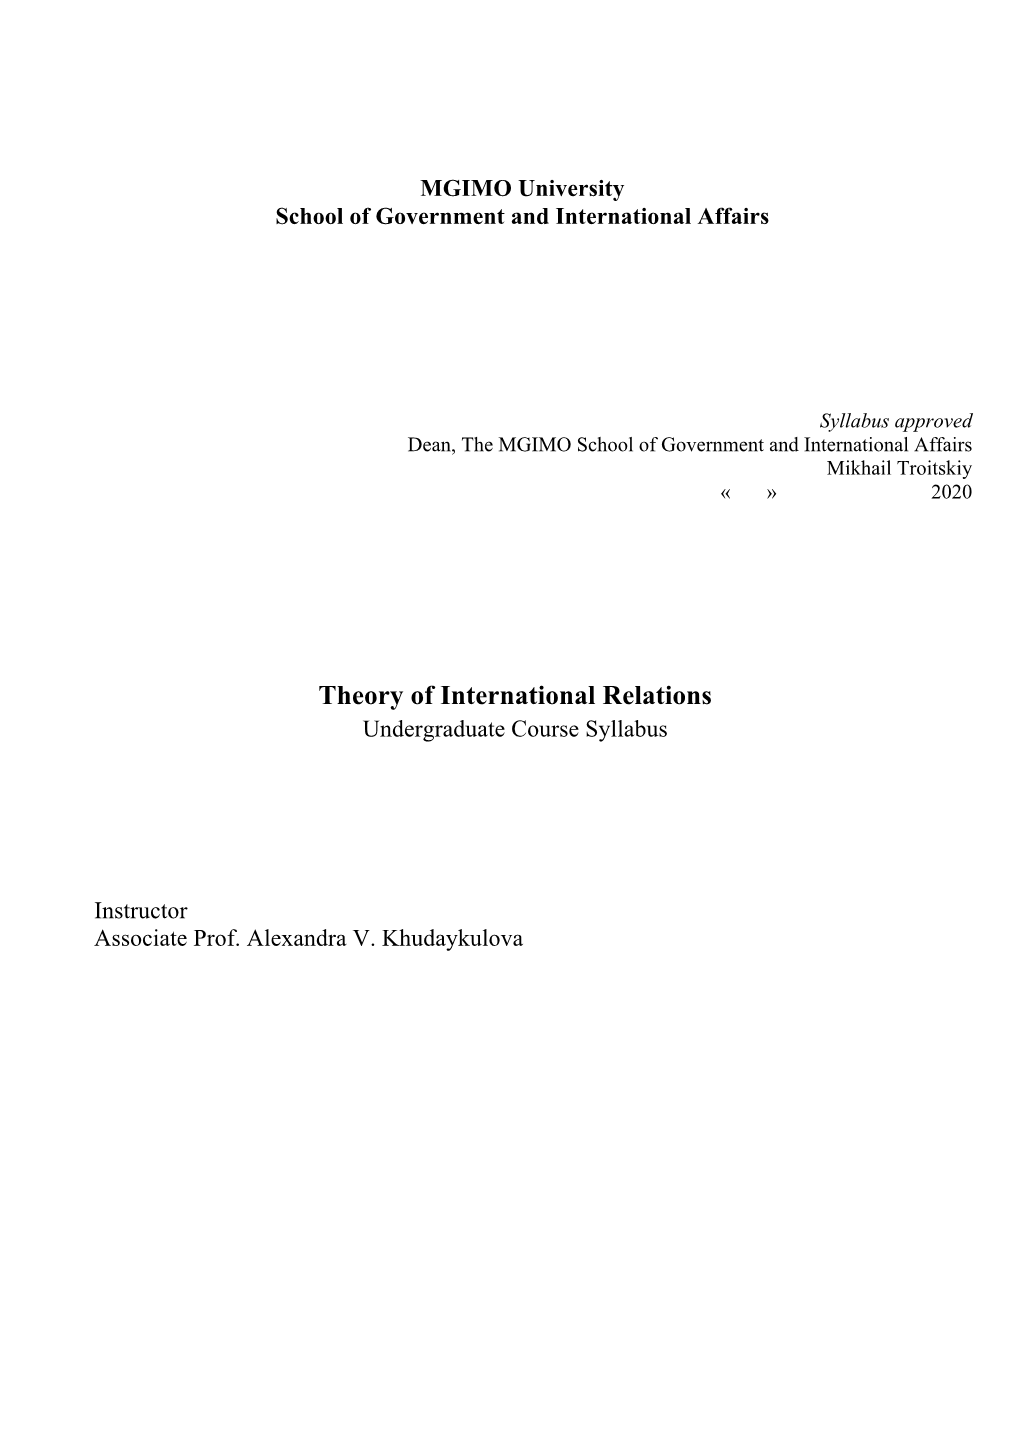 Theory of International Relations Undergraduate Course Syllabus